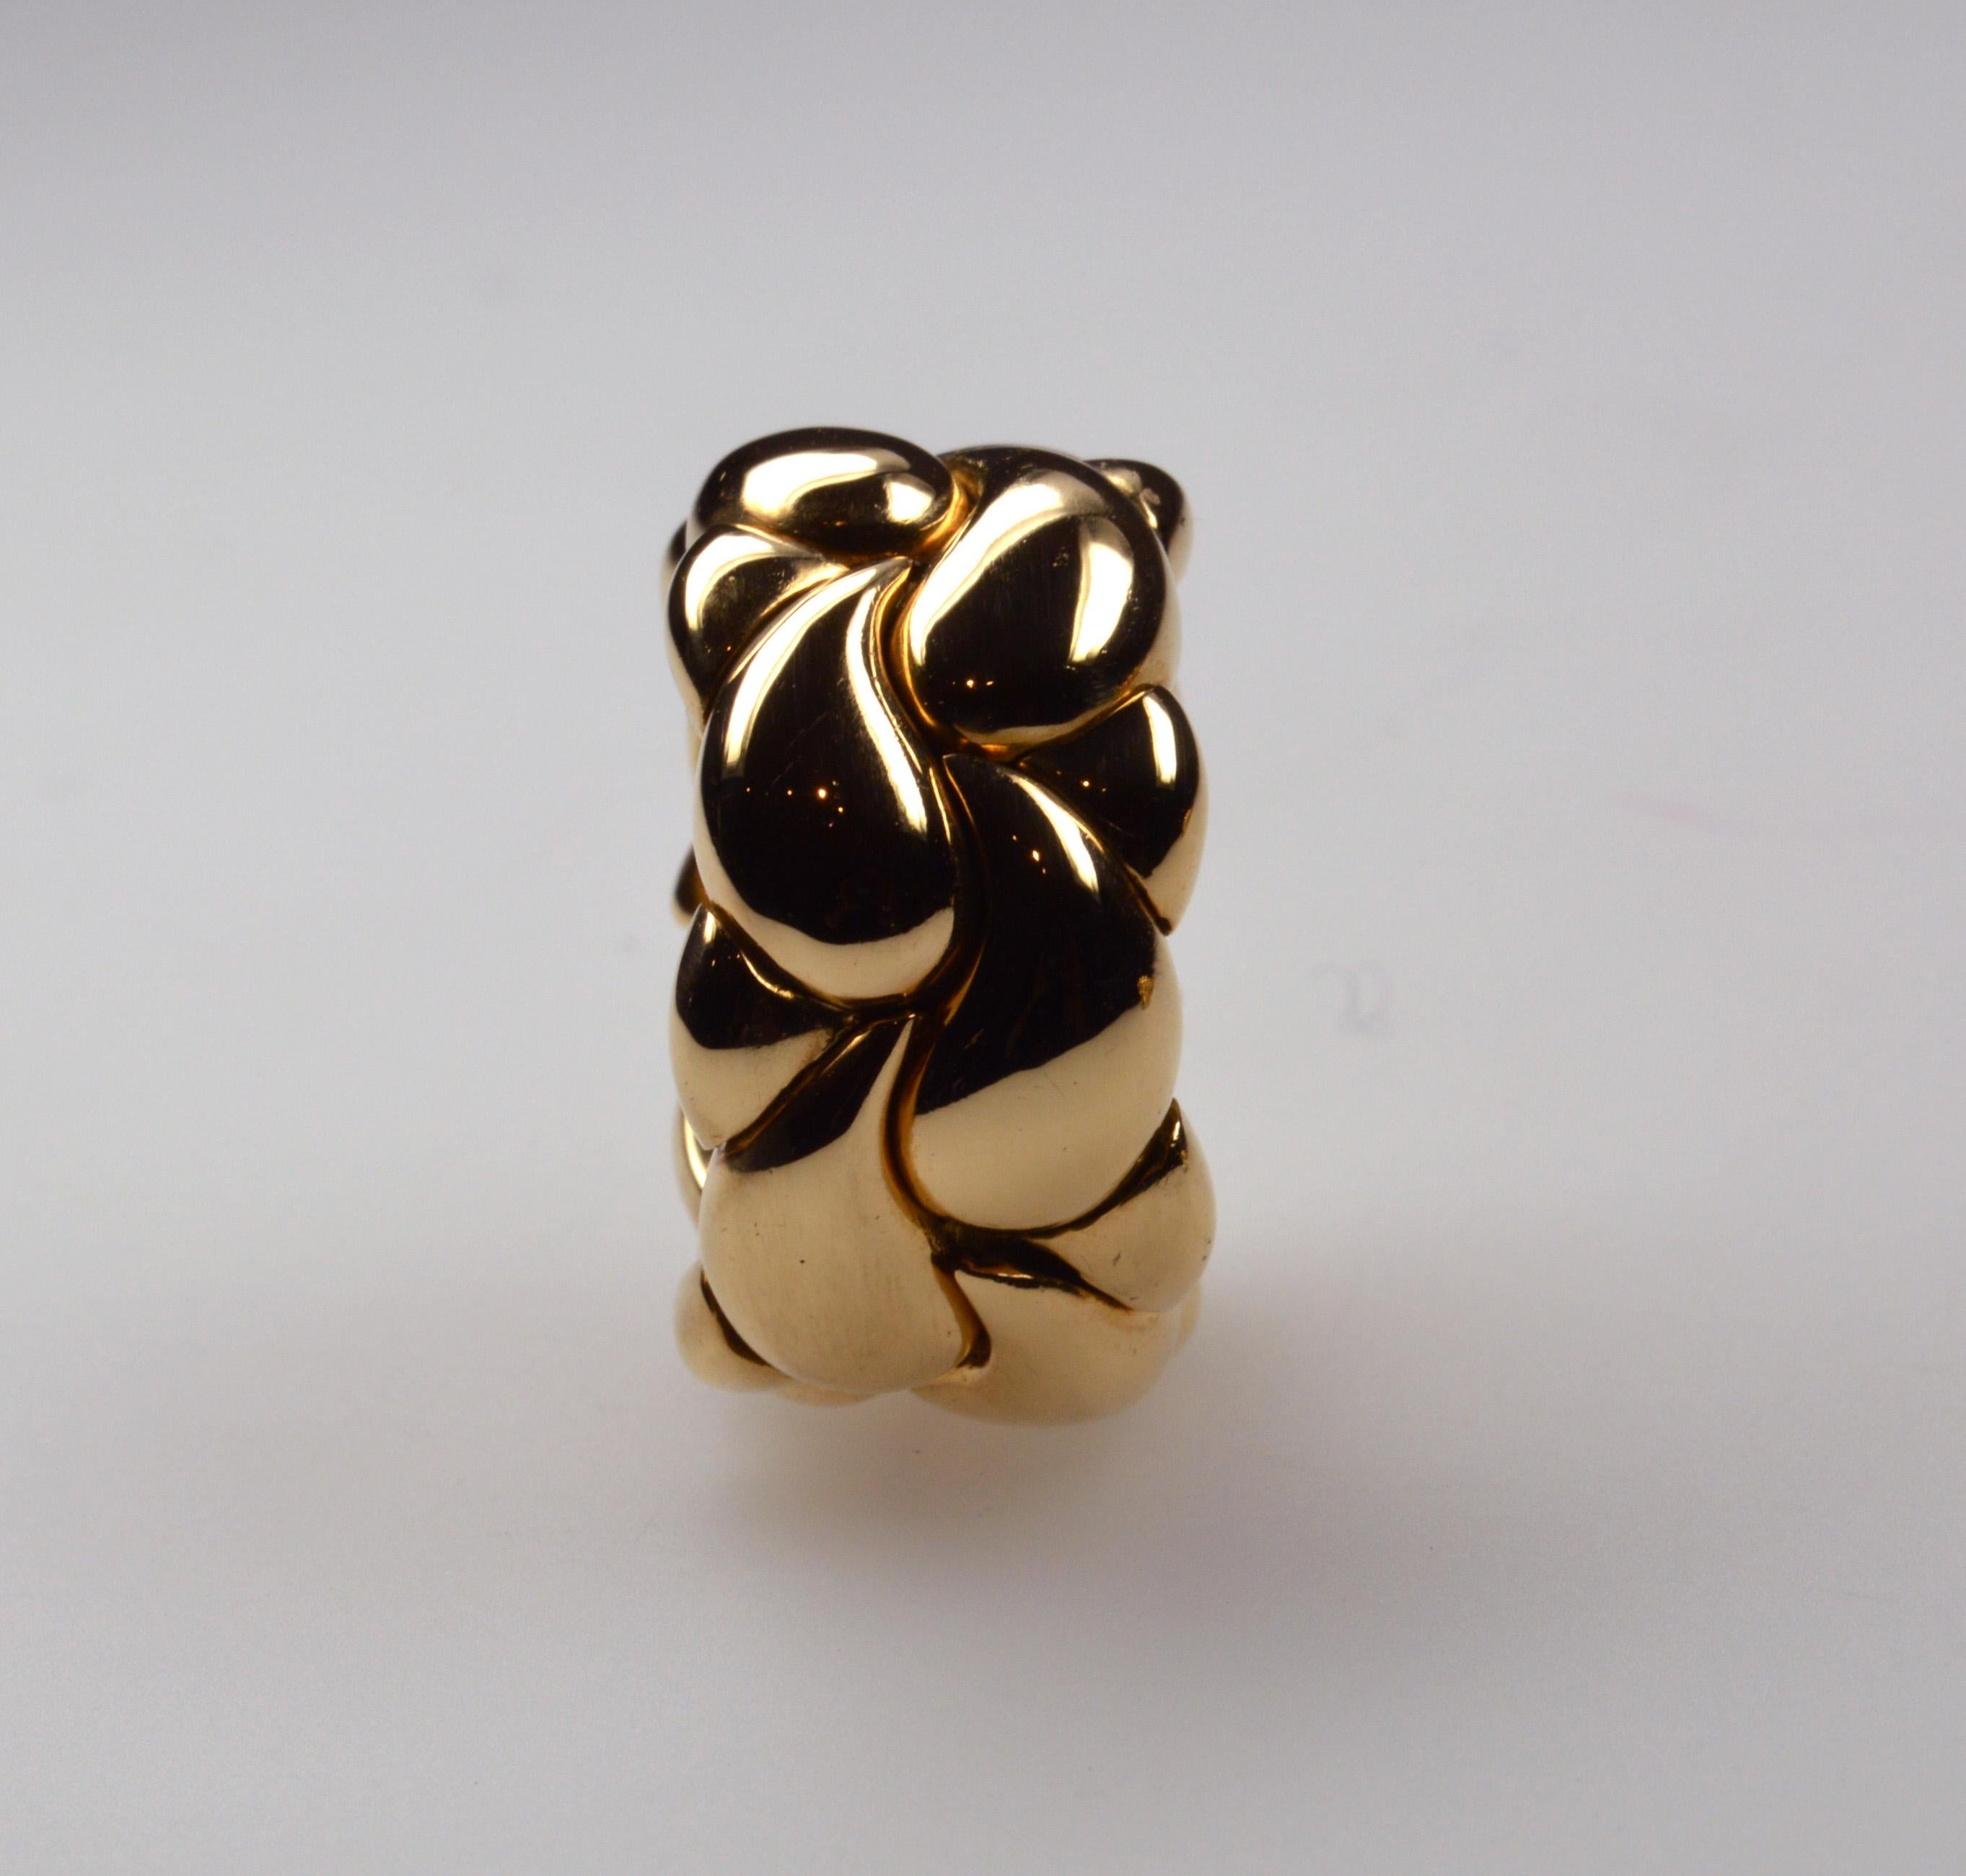 Chopard Casmir gold ring in 18K yellow Gold
Signature: Chopard Casmir

 Ring size 12+